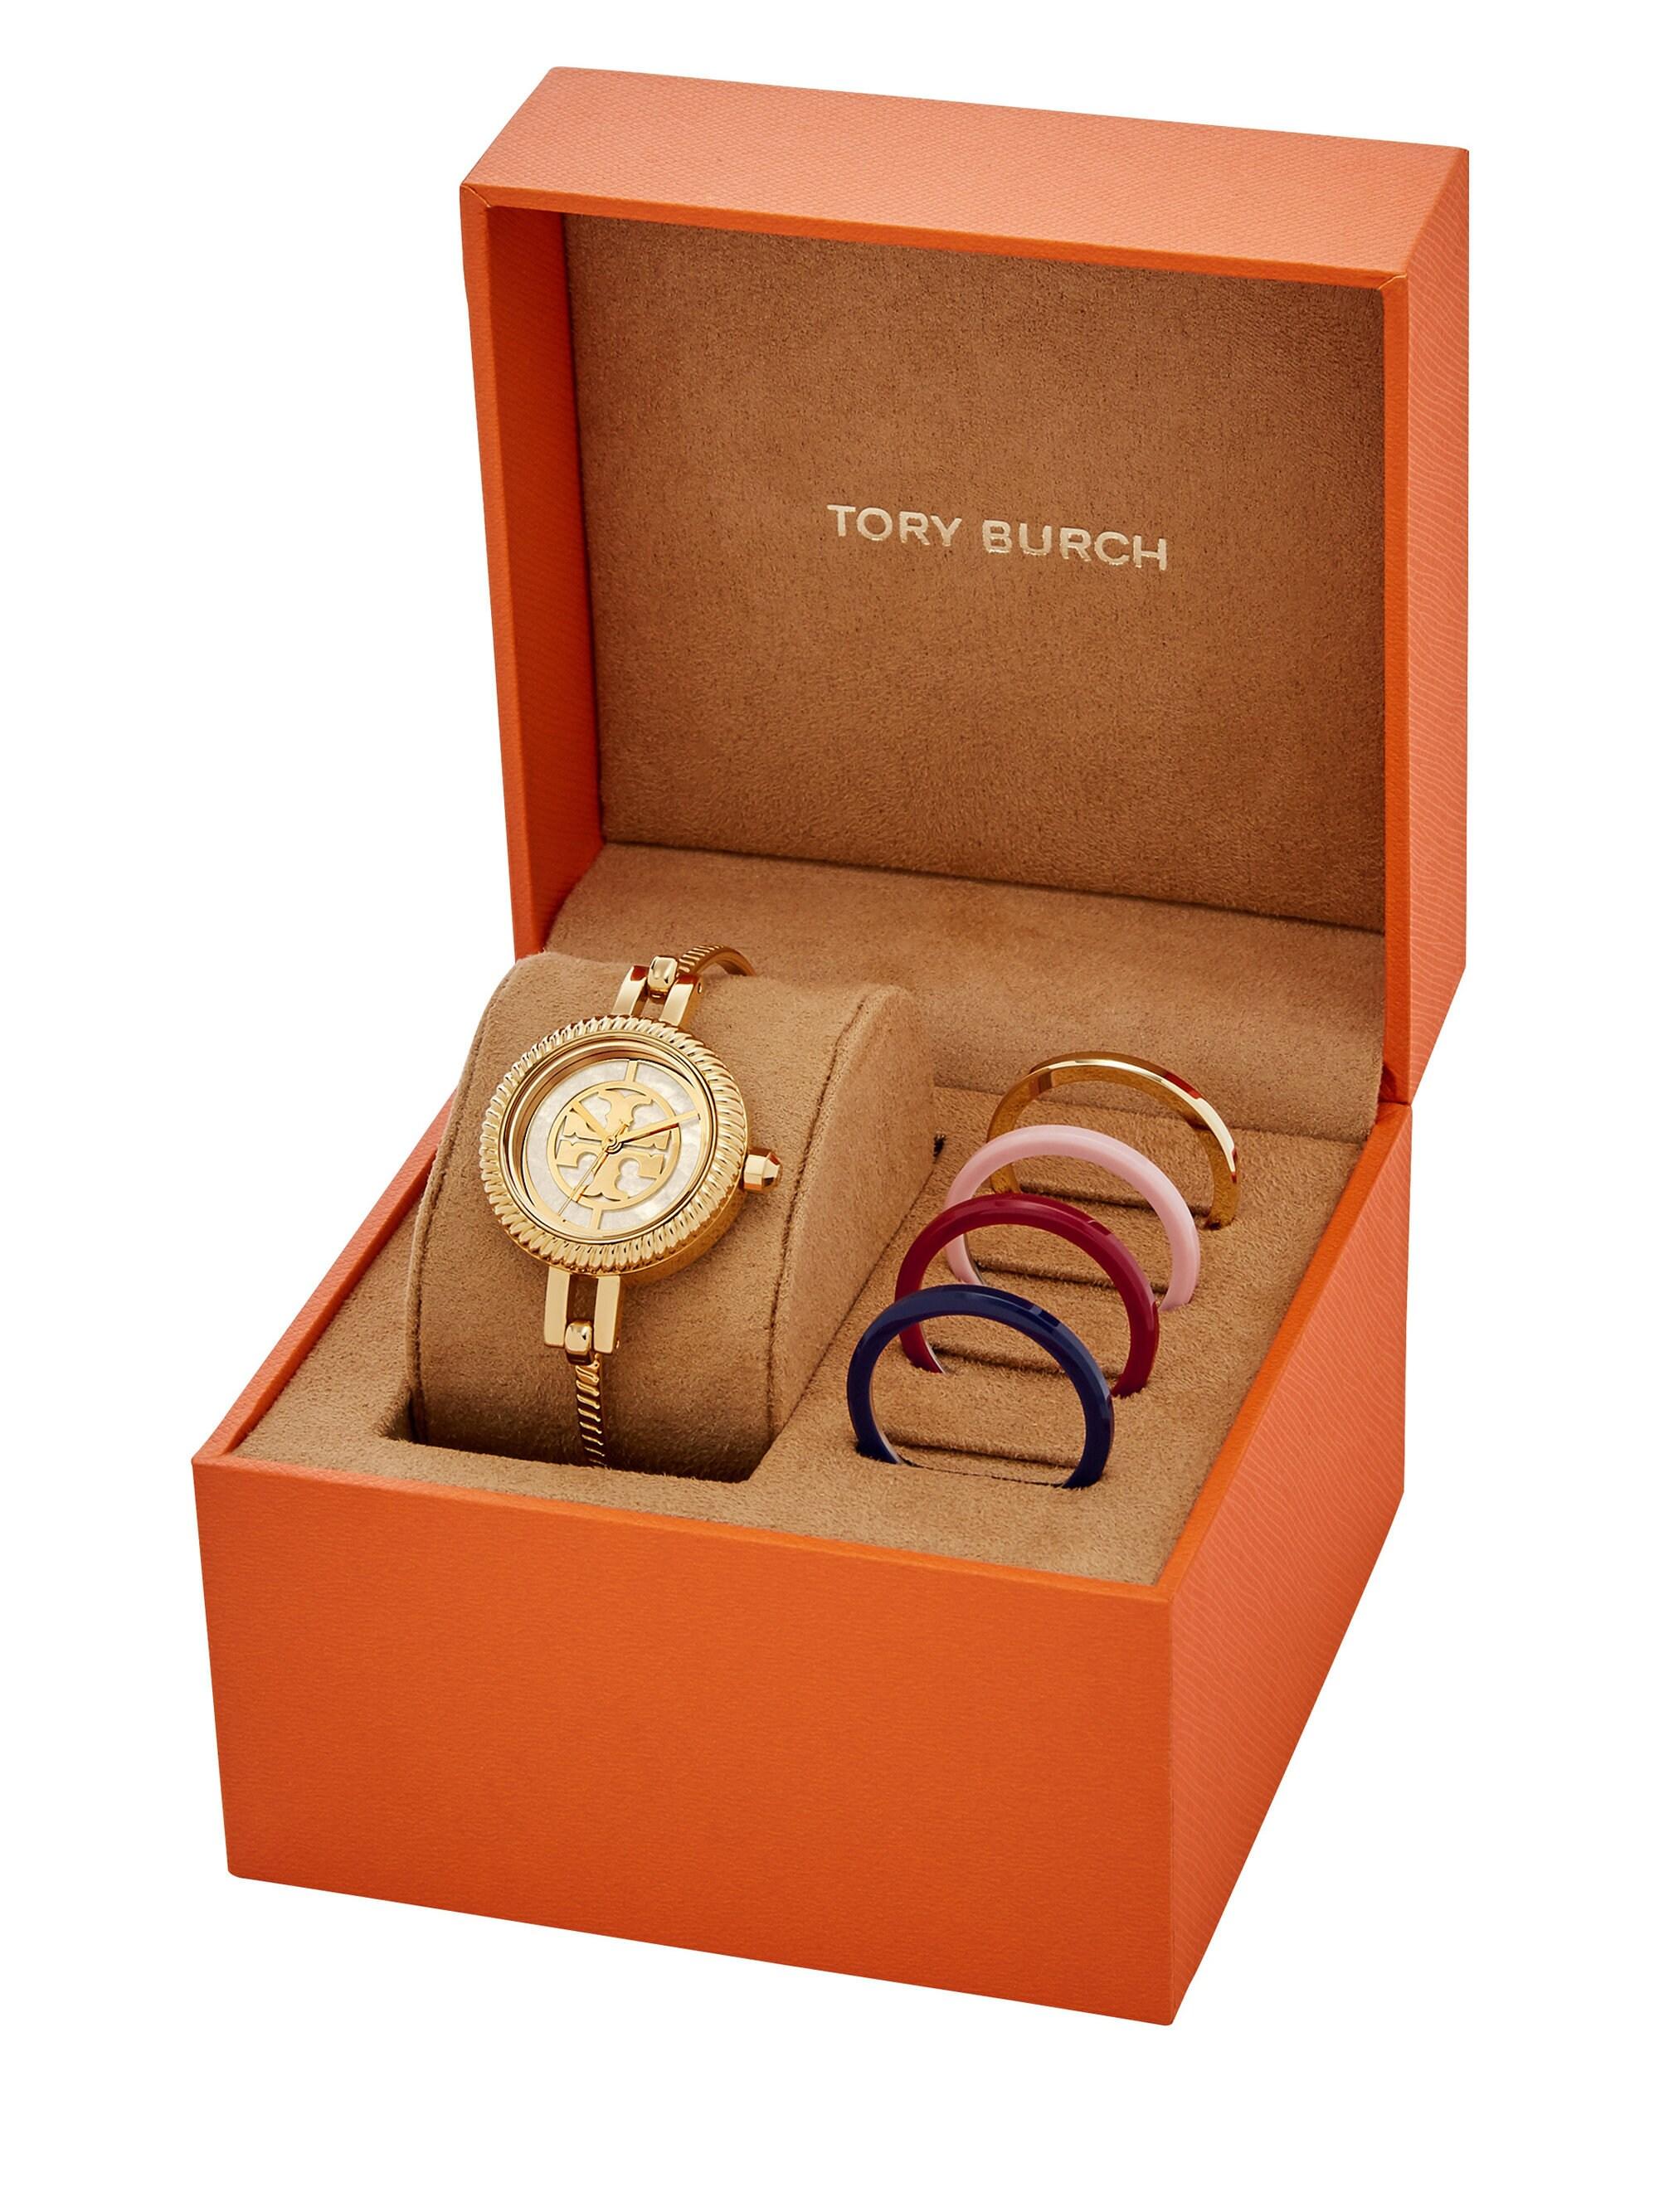 Tory Burch Reva Bangle Watch, Multi-color/gold-tone, 29 Mm in Metallic